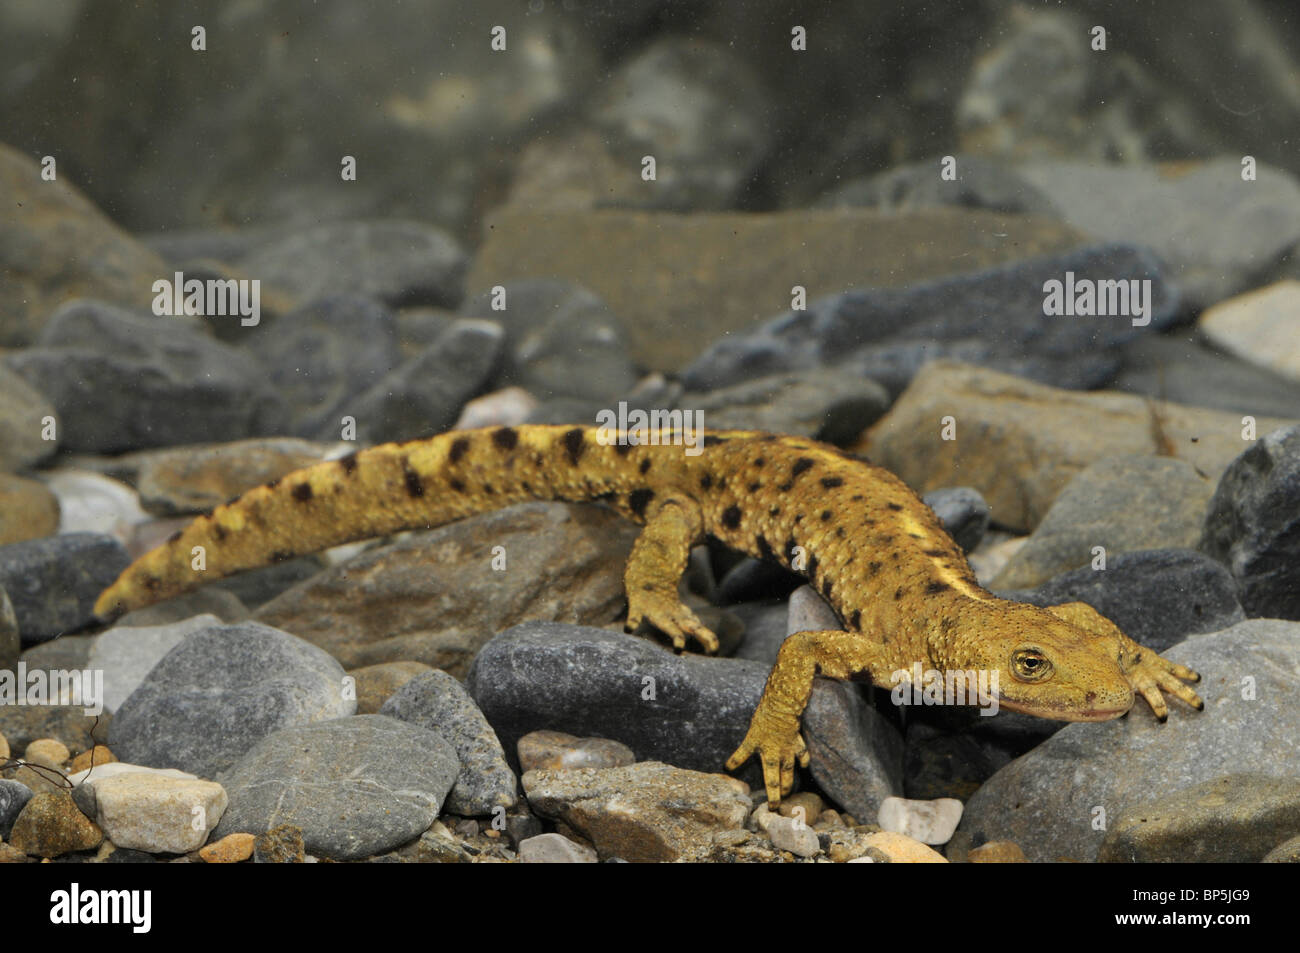 Pirenei brook salamander, montagna dei pirenei newt (Euproctus asper, Calotriton asper), subacquea su pietre, Spagna, Pirenei, O Foto Stock